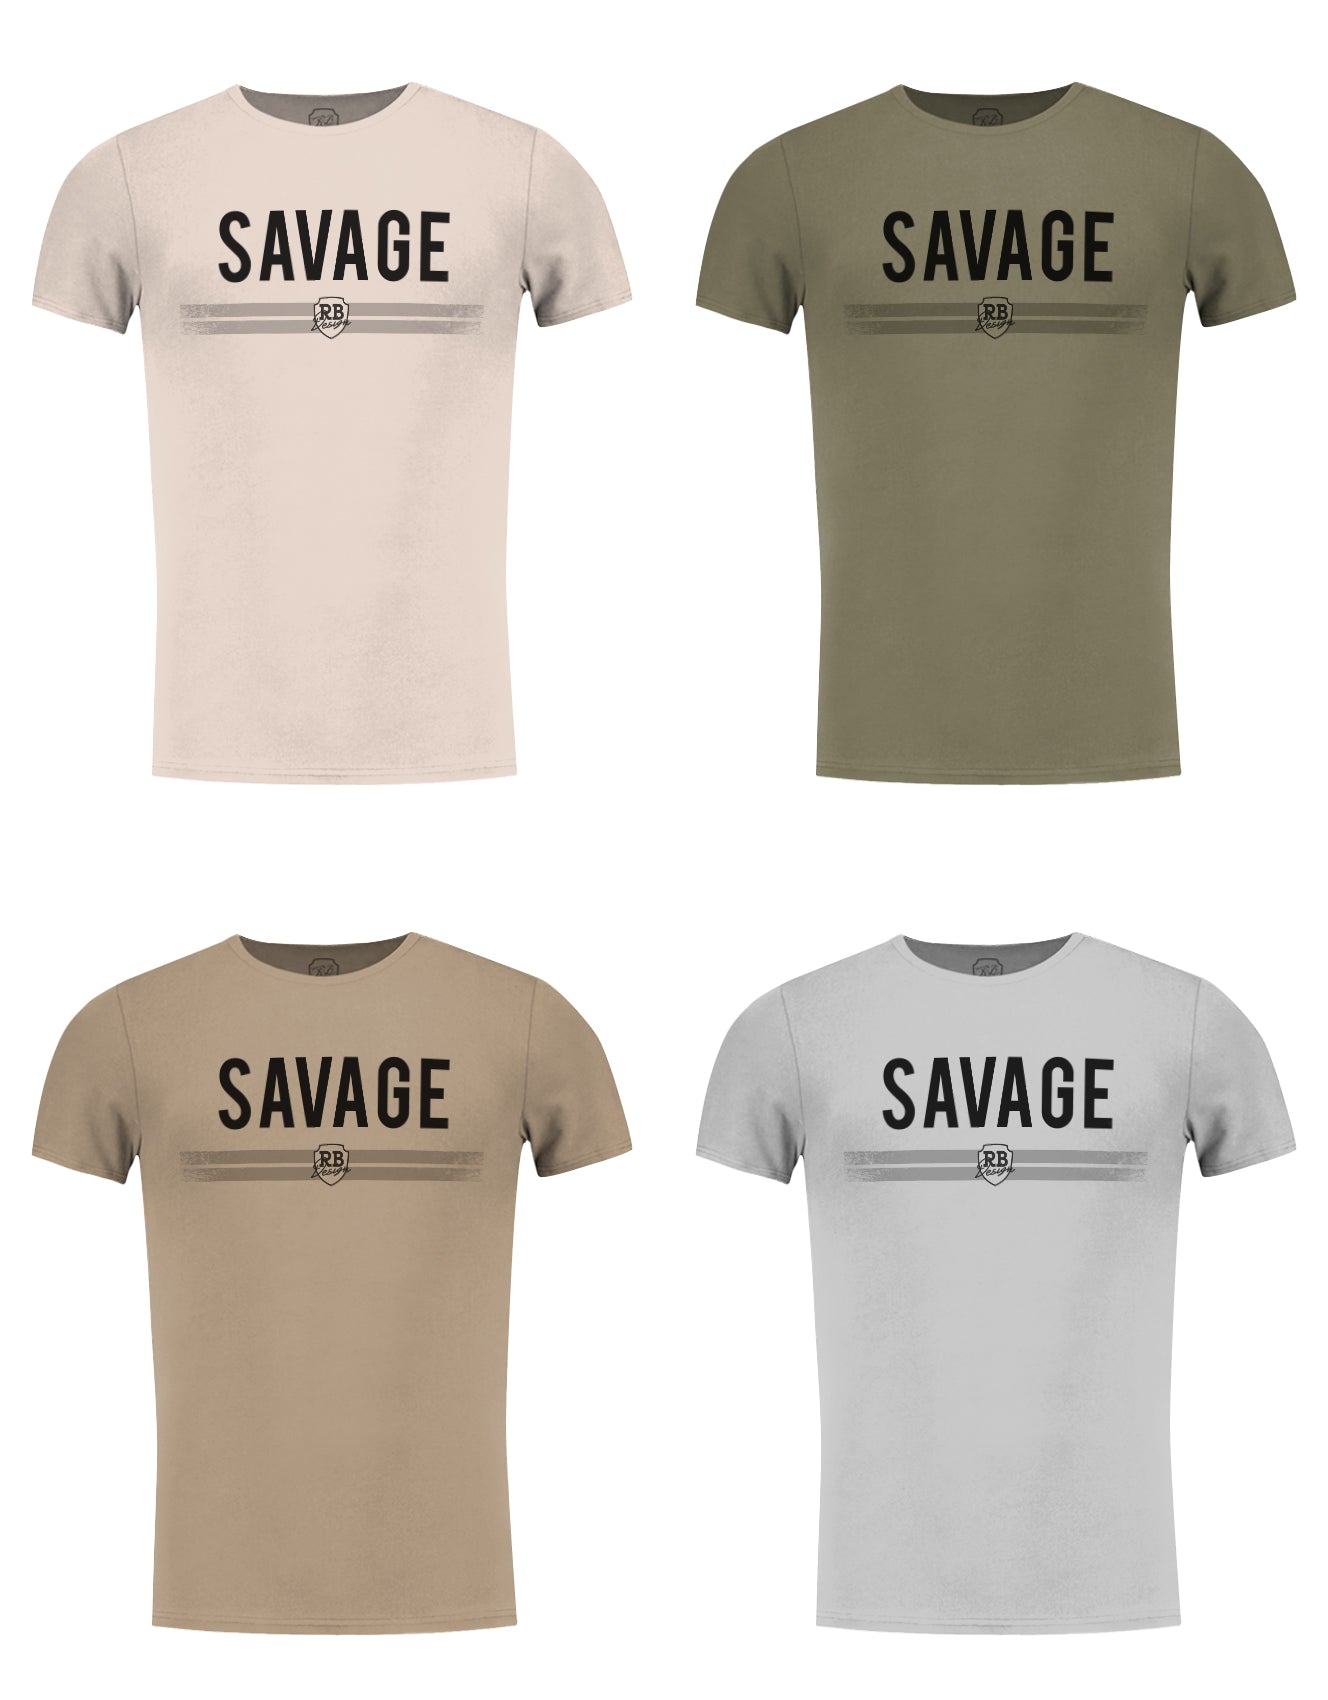 Men's T-shirt "RBD Savage" Khaki Gray Beige / Color Option / MD935